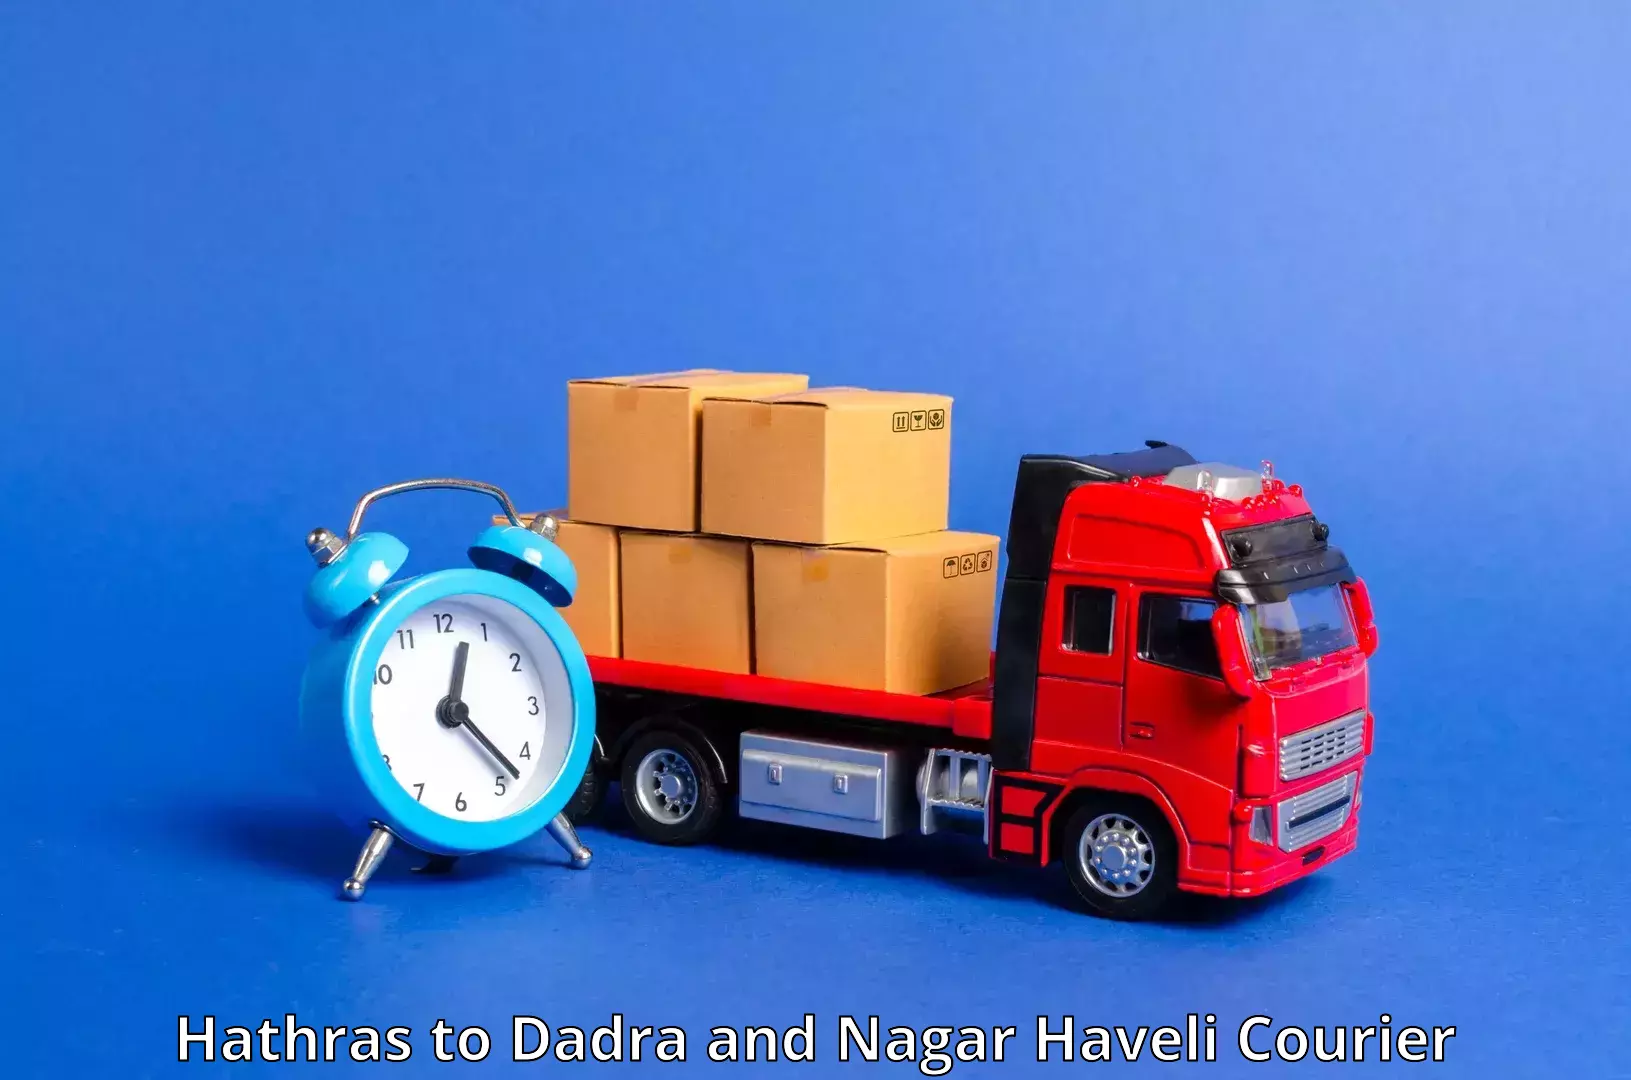 Comprehensive shipping network Hathras to Silvassa